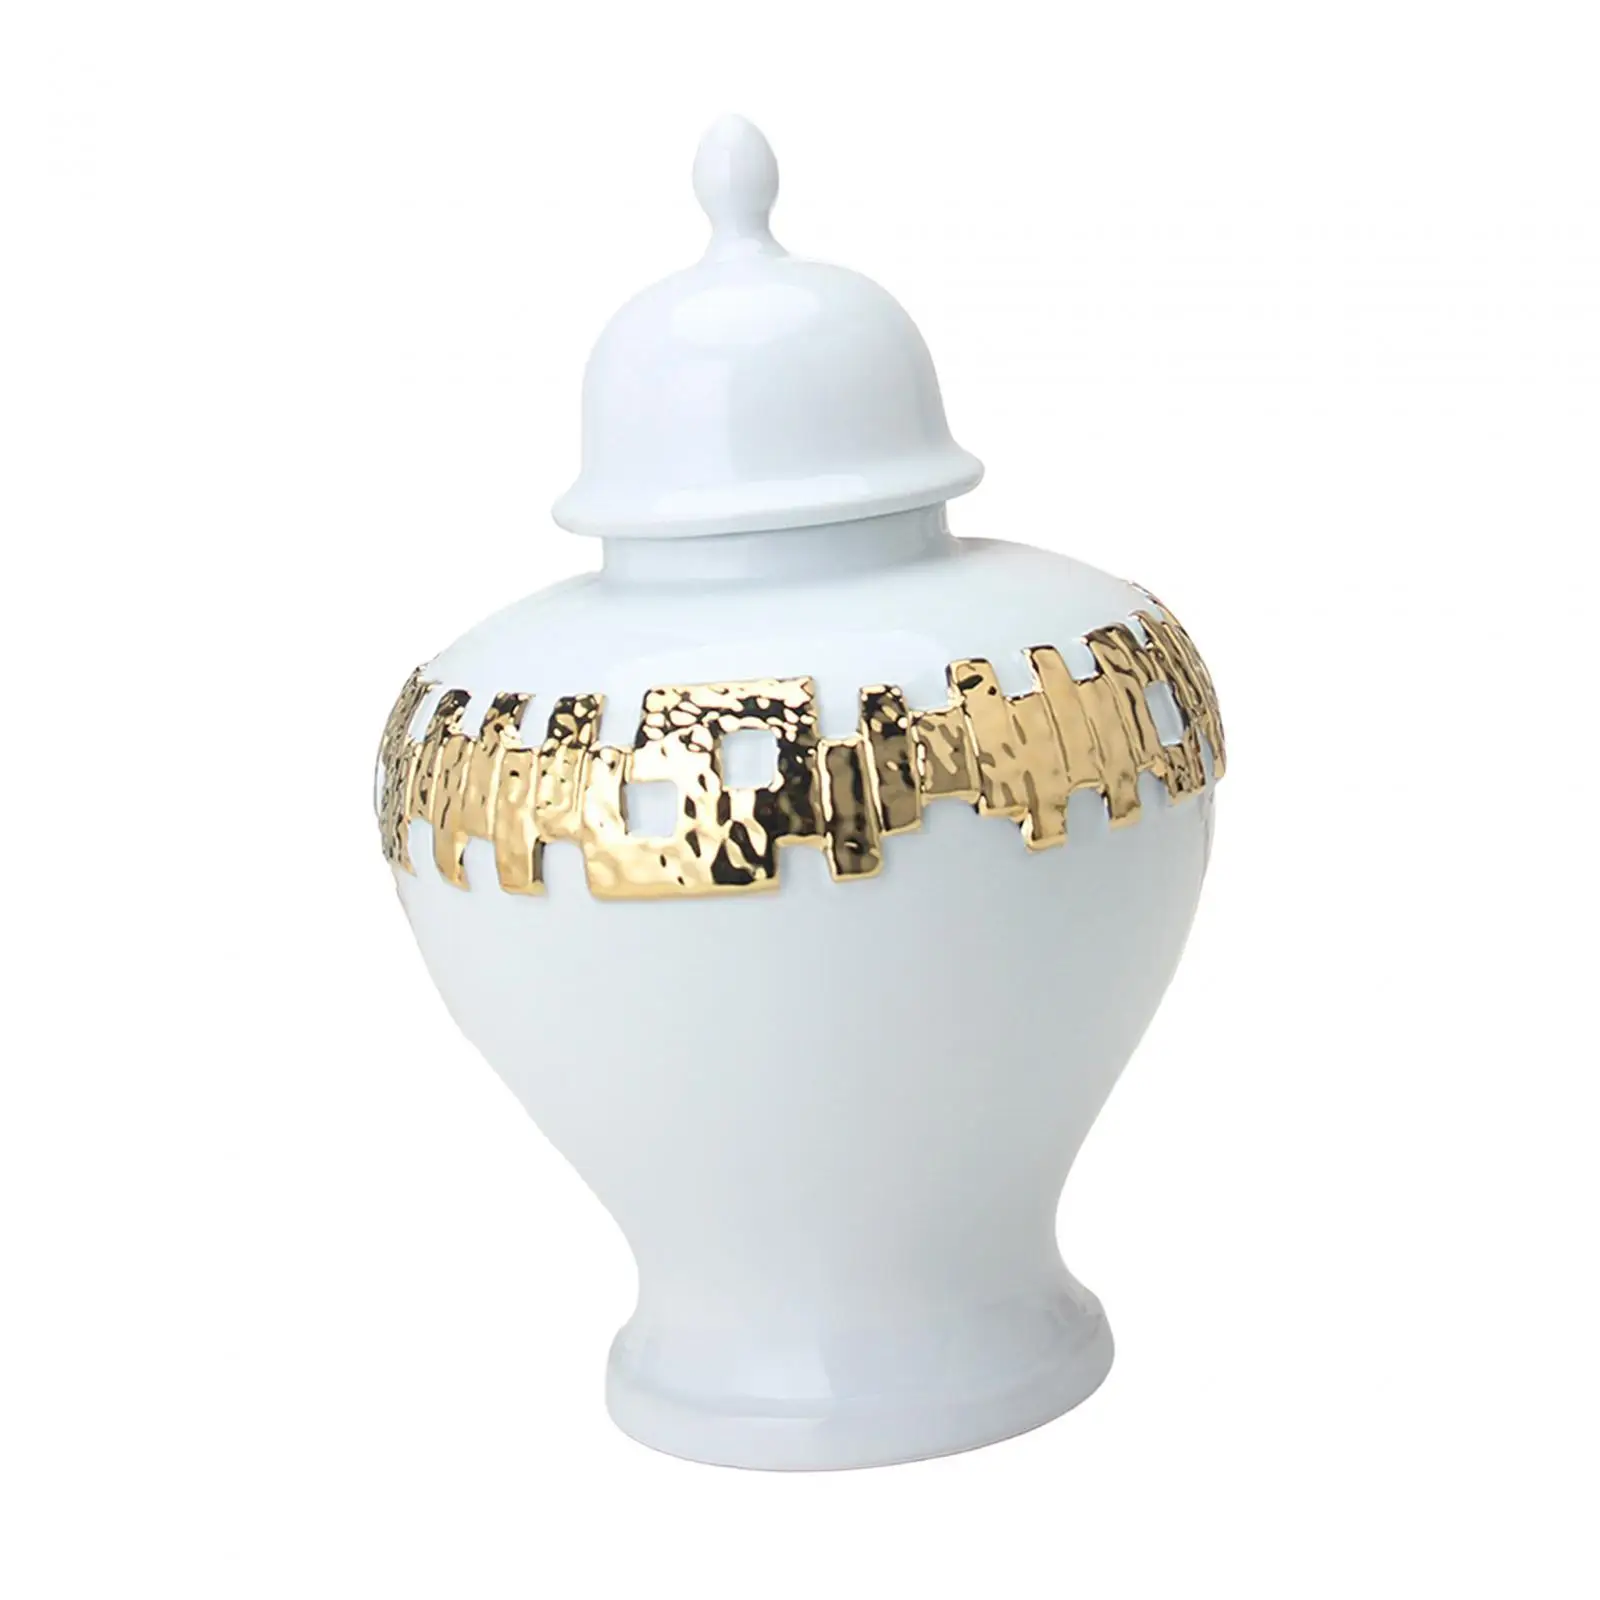 Porcelain Ginger Jars Ceramic Flower Vase Temple Jar with Lid Table Centerpieces